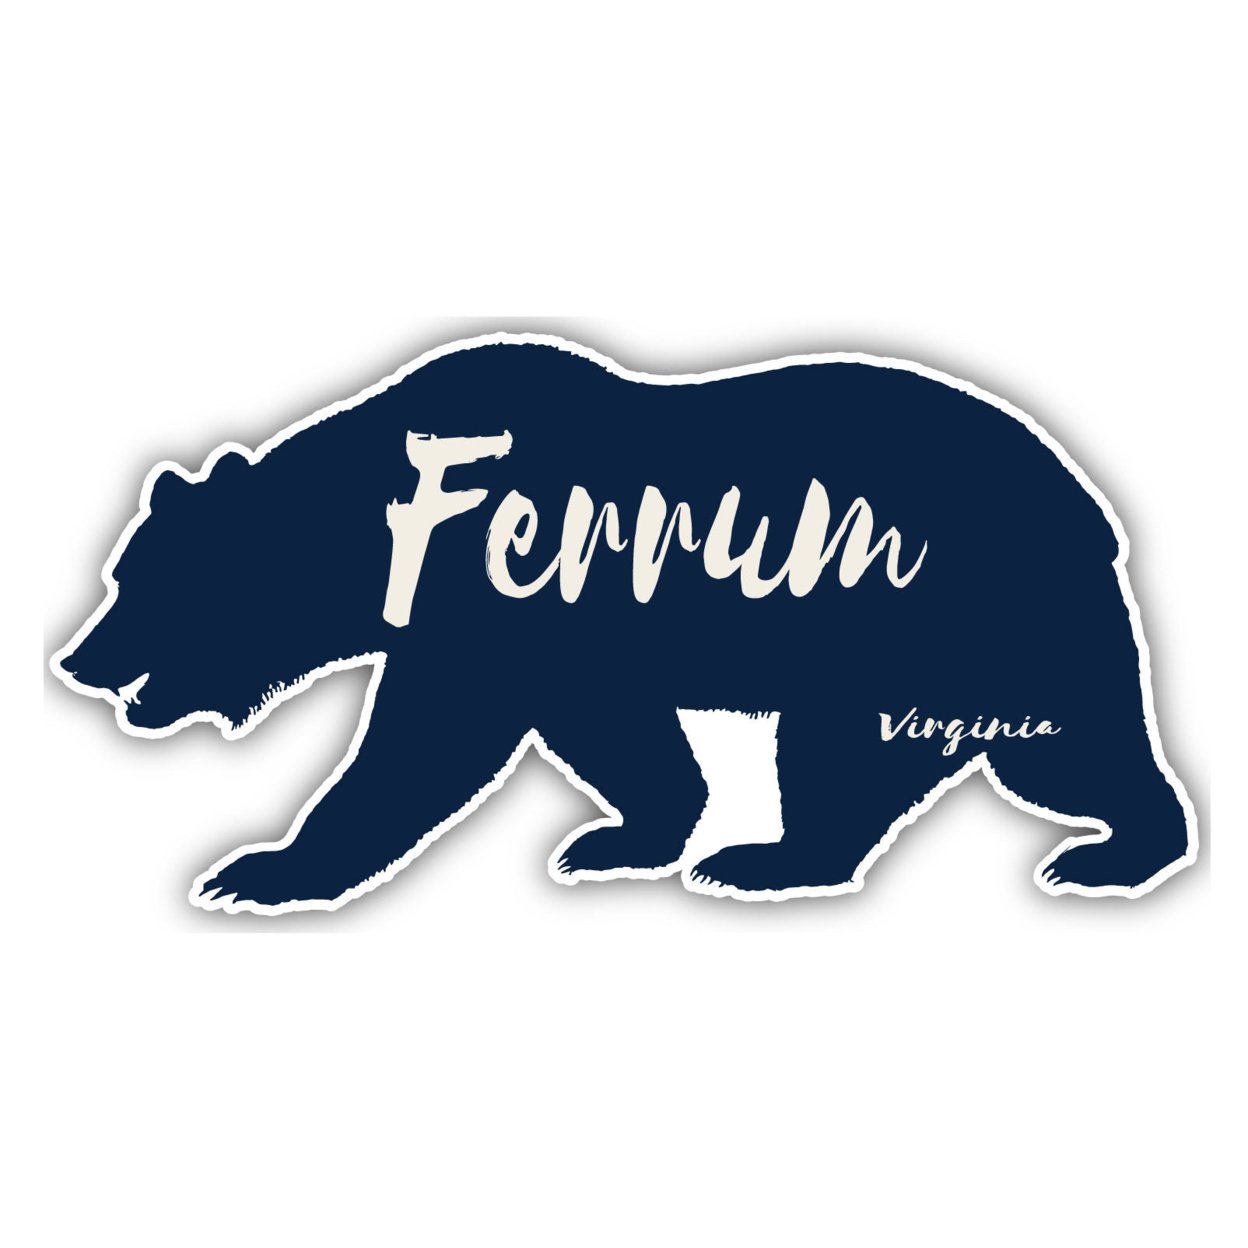 Ferrum Virginia Souvenir Decorative Stickers (Choose Theme And Size) - 4-Pack, 8-Inch, Bear